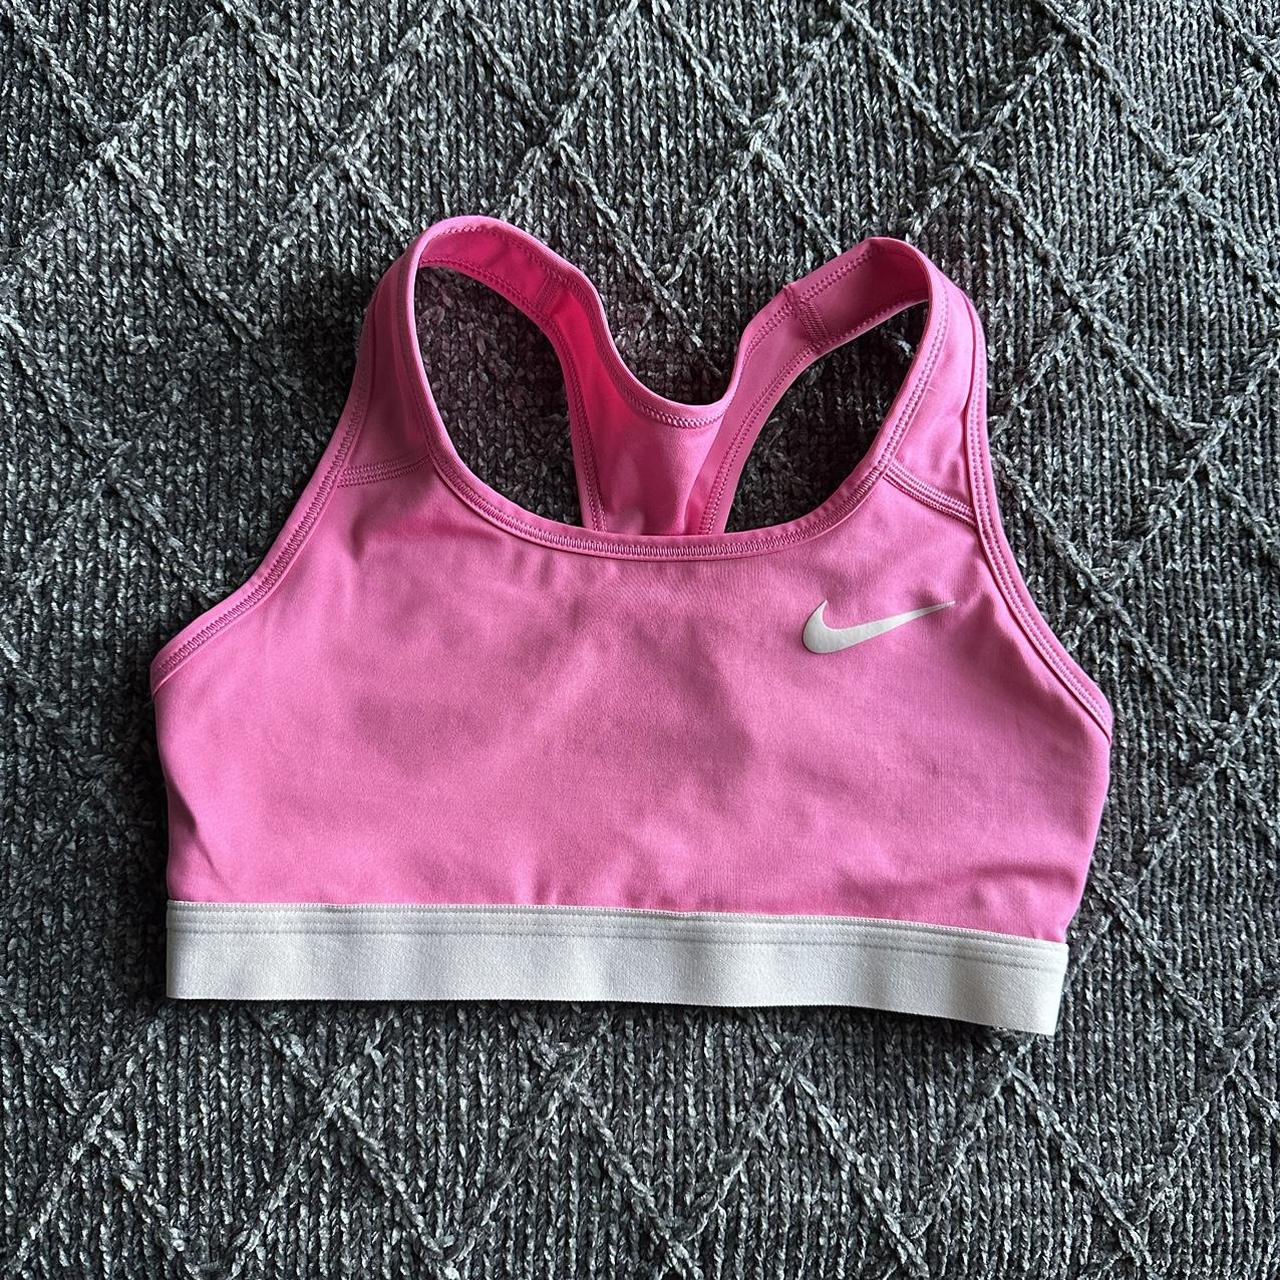 adorable pink bebe sports bra - shipping: $5 - open - Depop